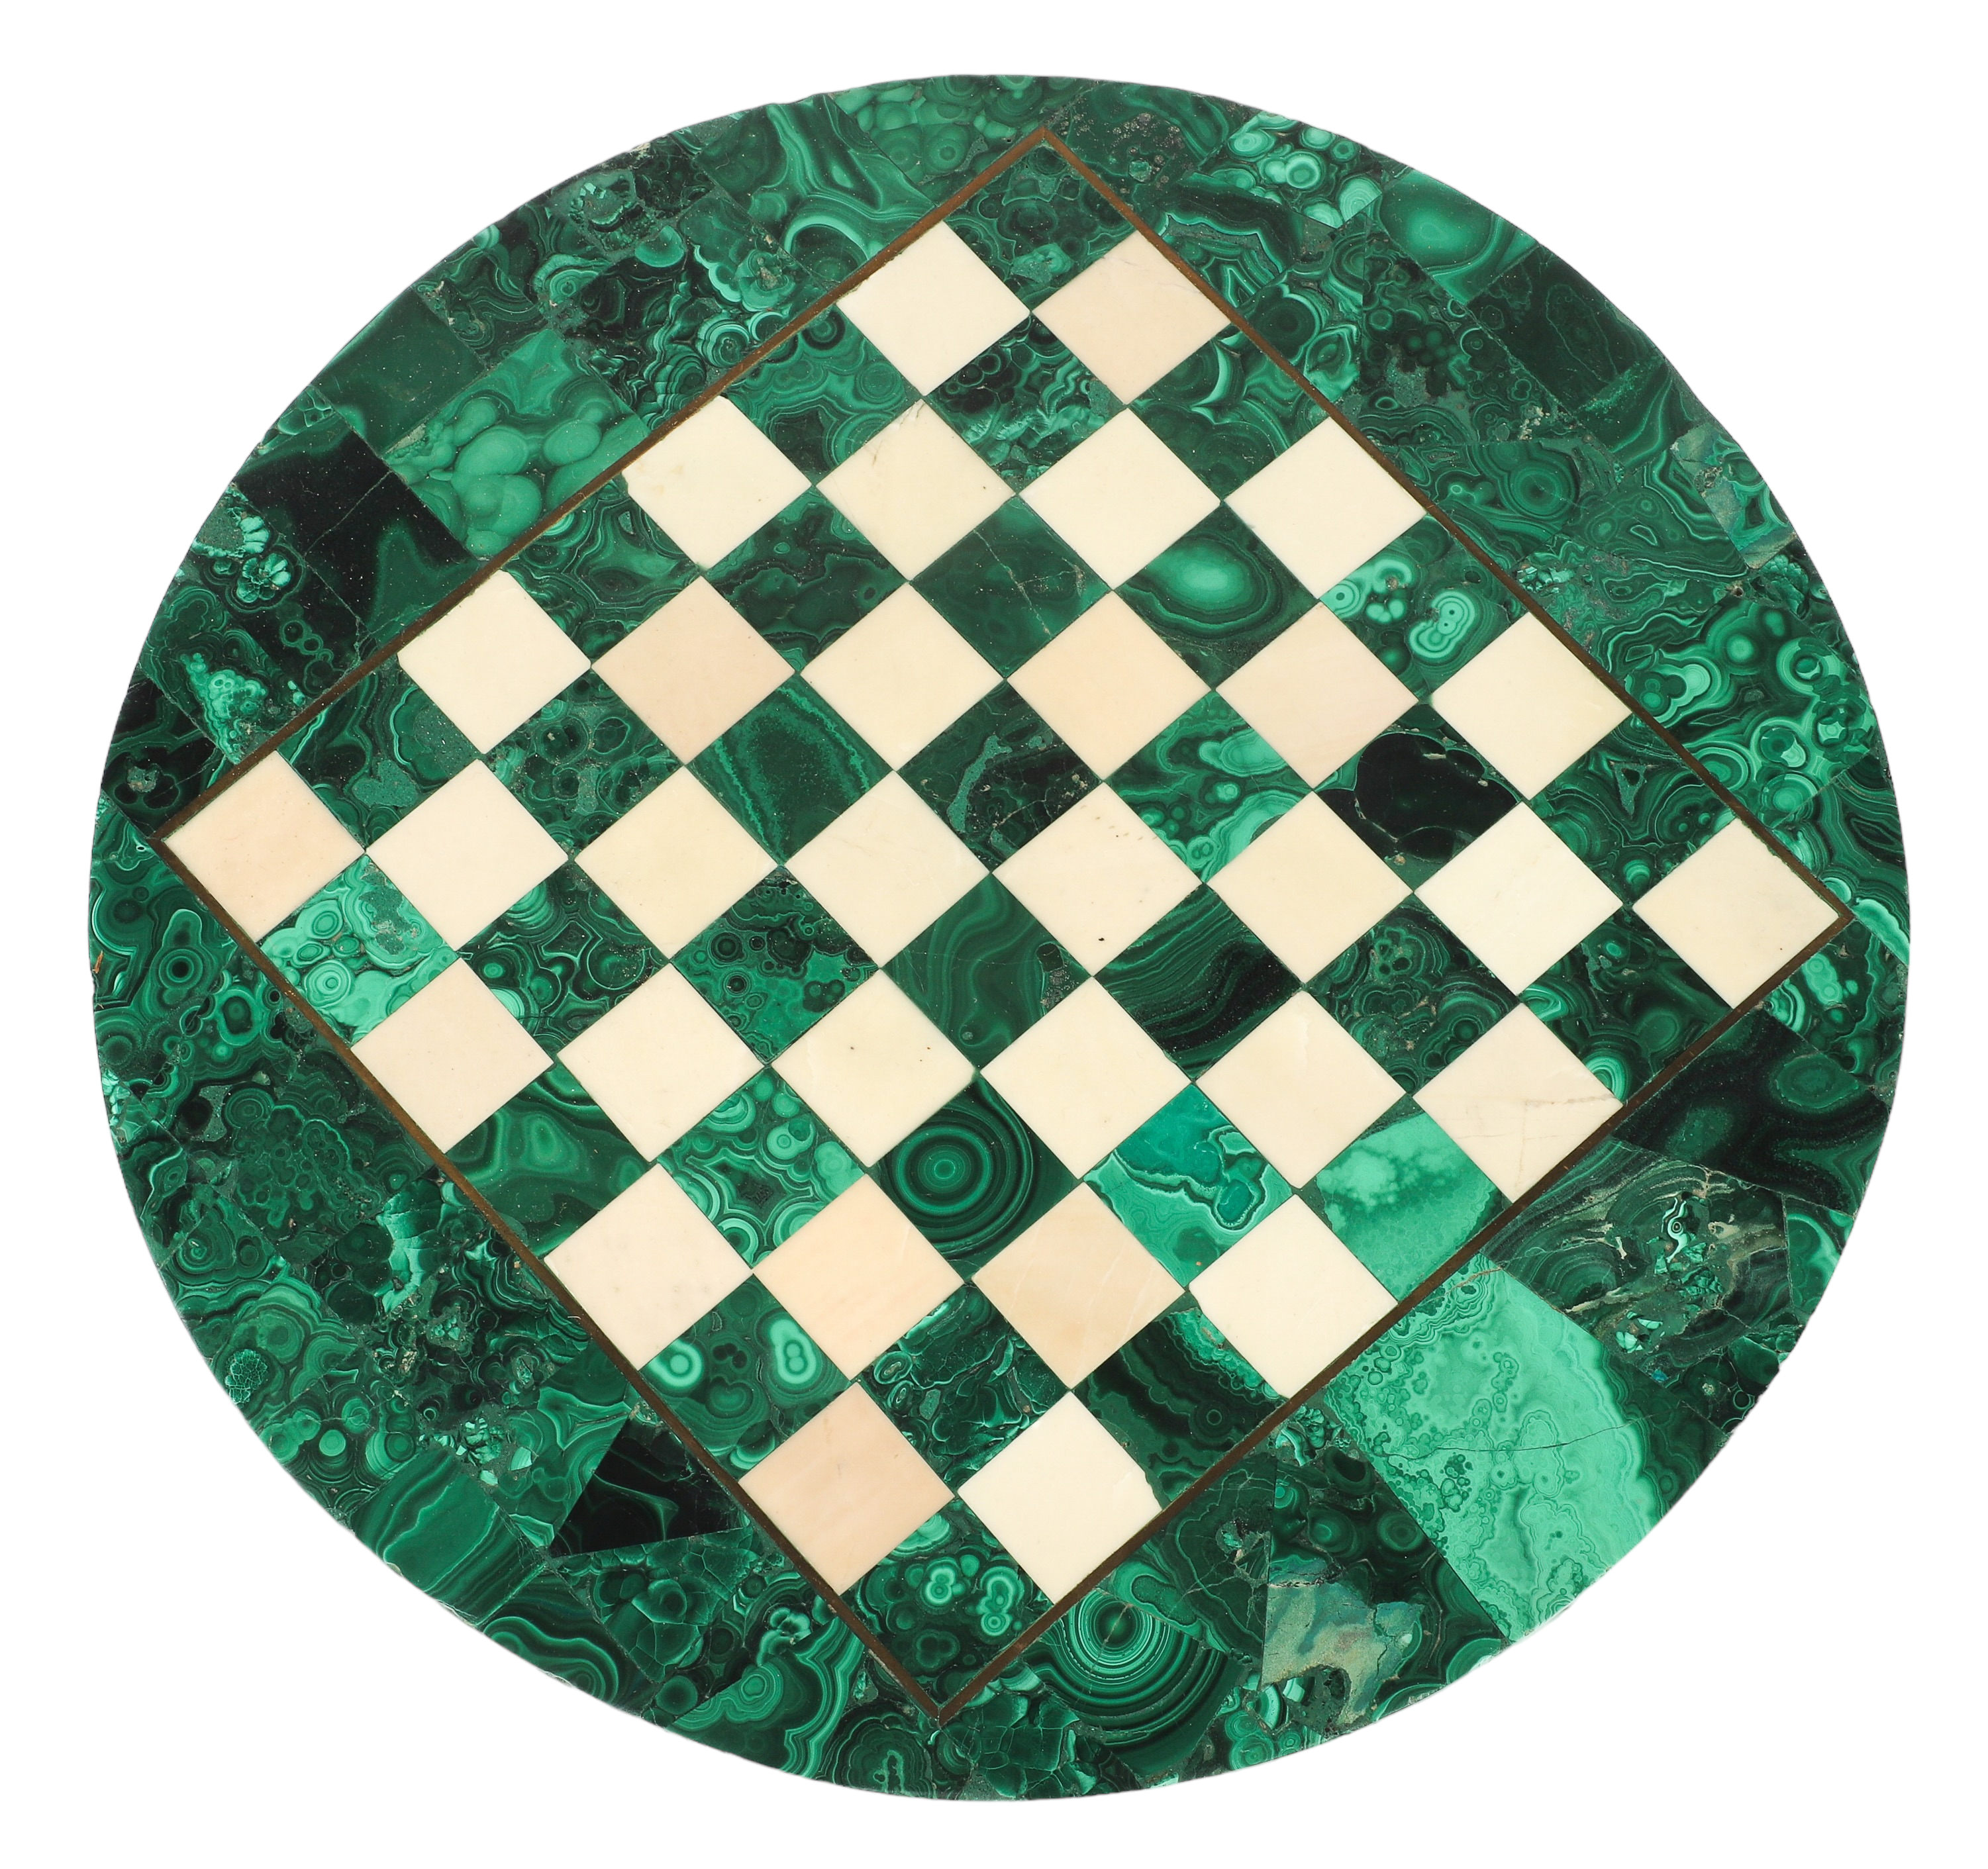 Stone checkers / chess game board,